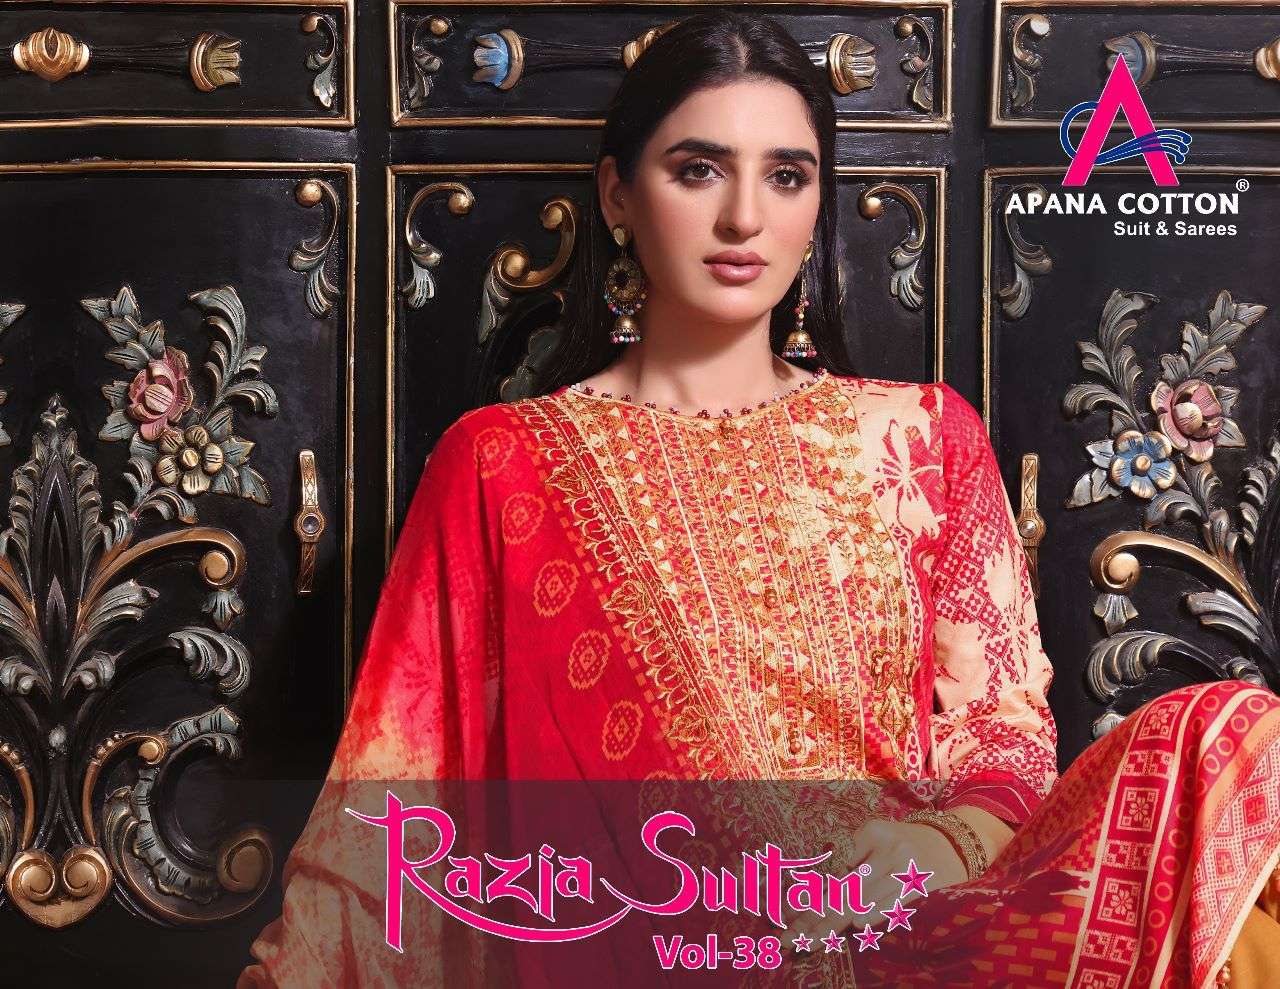 Apana Cotton Razia Sultan Vol 38 Fancy Karachi Cotton Dress Catalog Exporter 